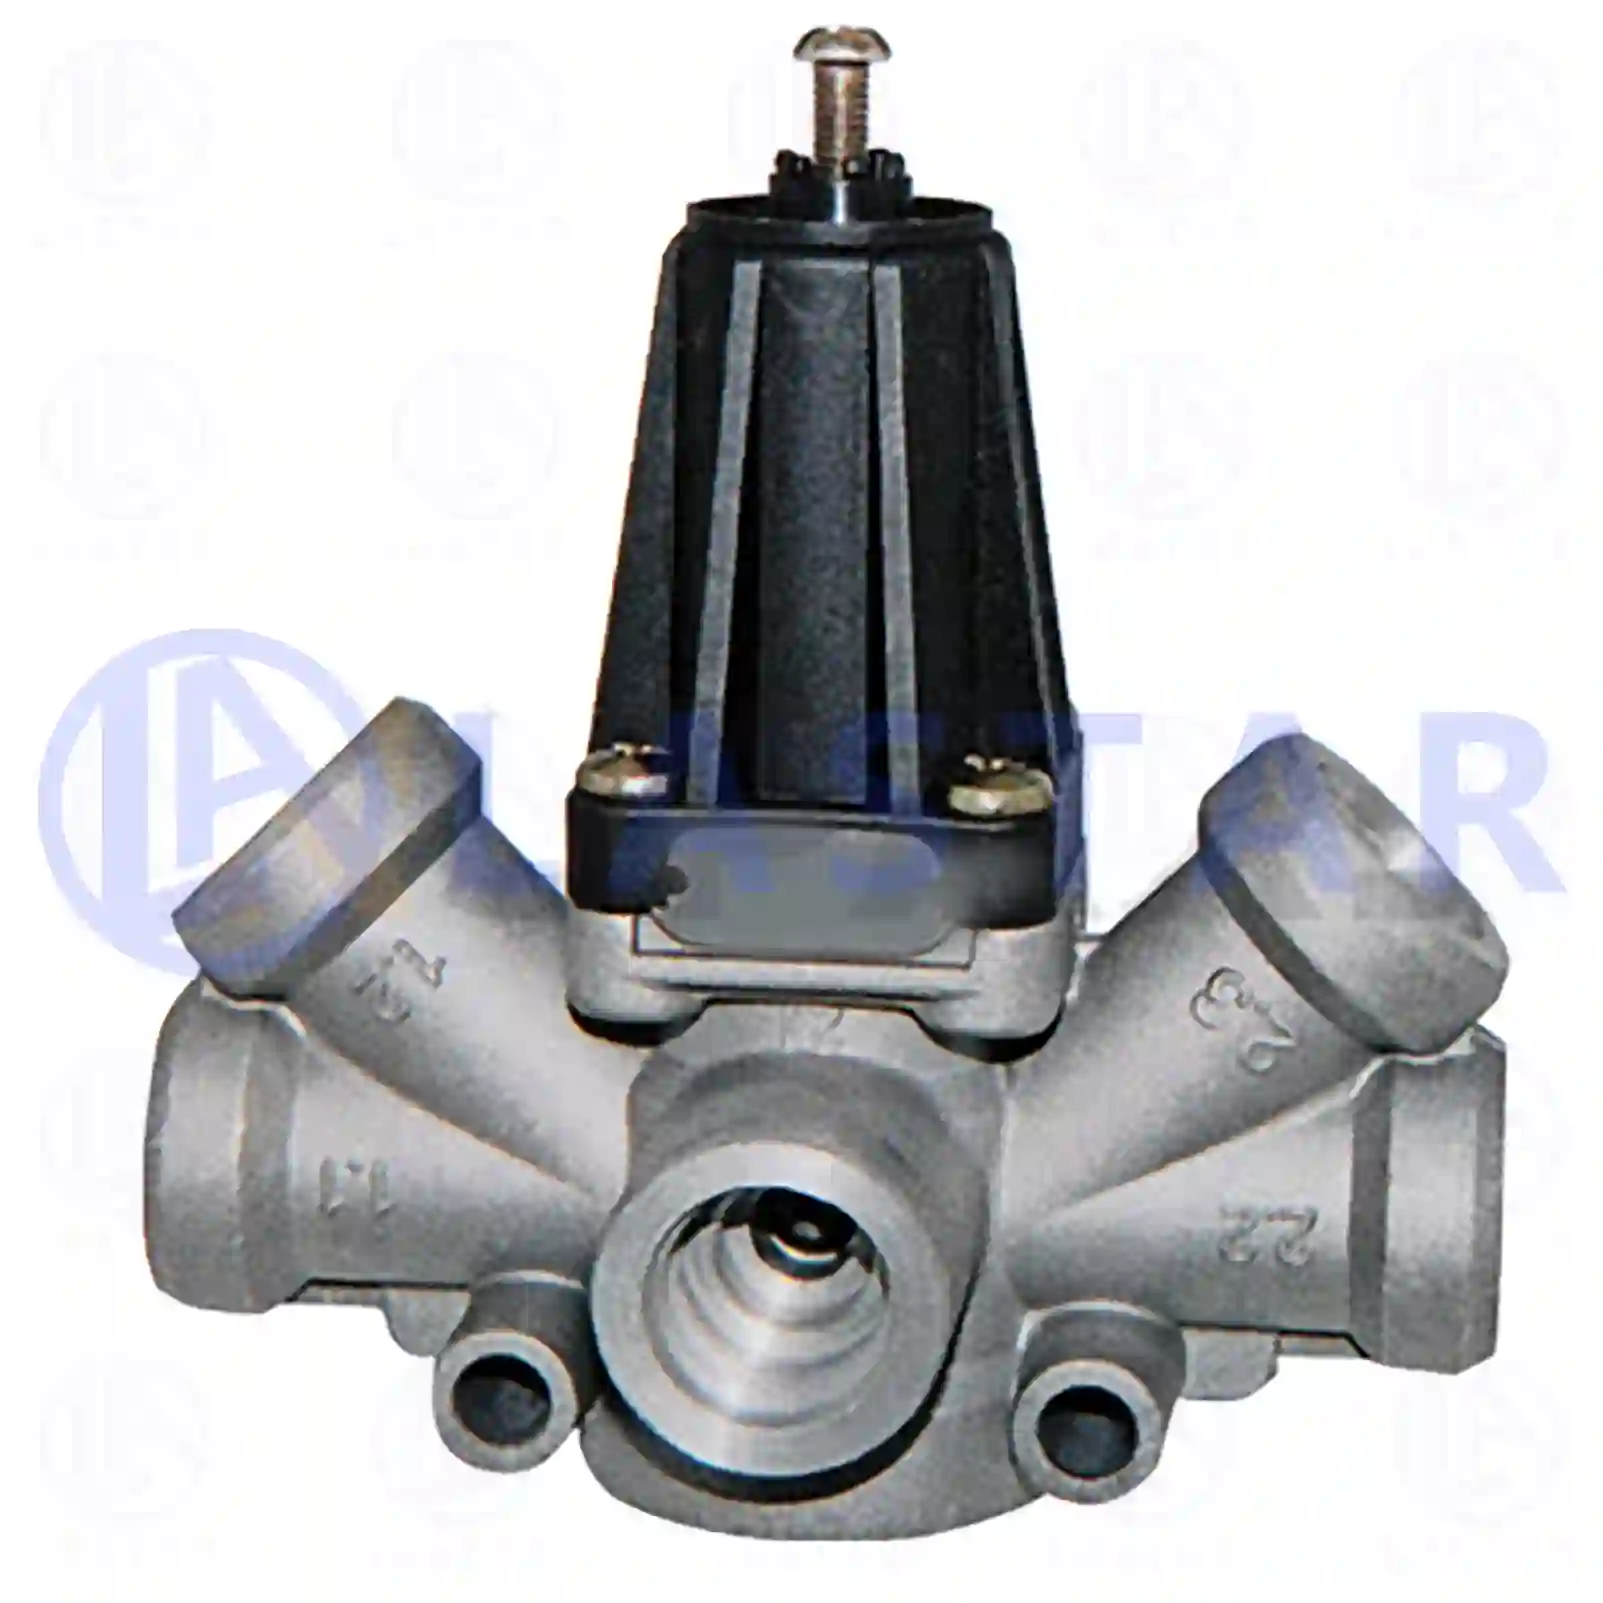 Pressure Valve Pressure limiting valve, la no: 77716345 ,  oem no:1305138, 1935020, ZG50572-0008, Lastar Spare Part | Truck Spare Parts, Auotomotive Spare Parts